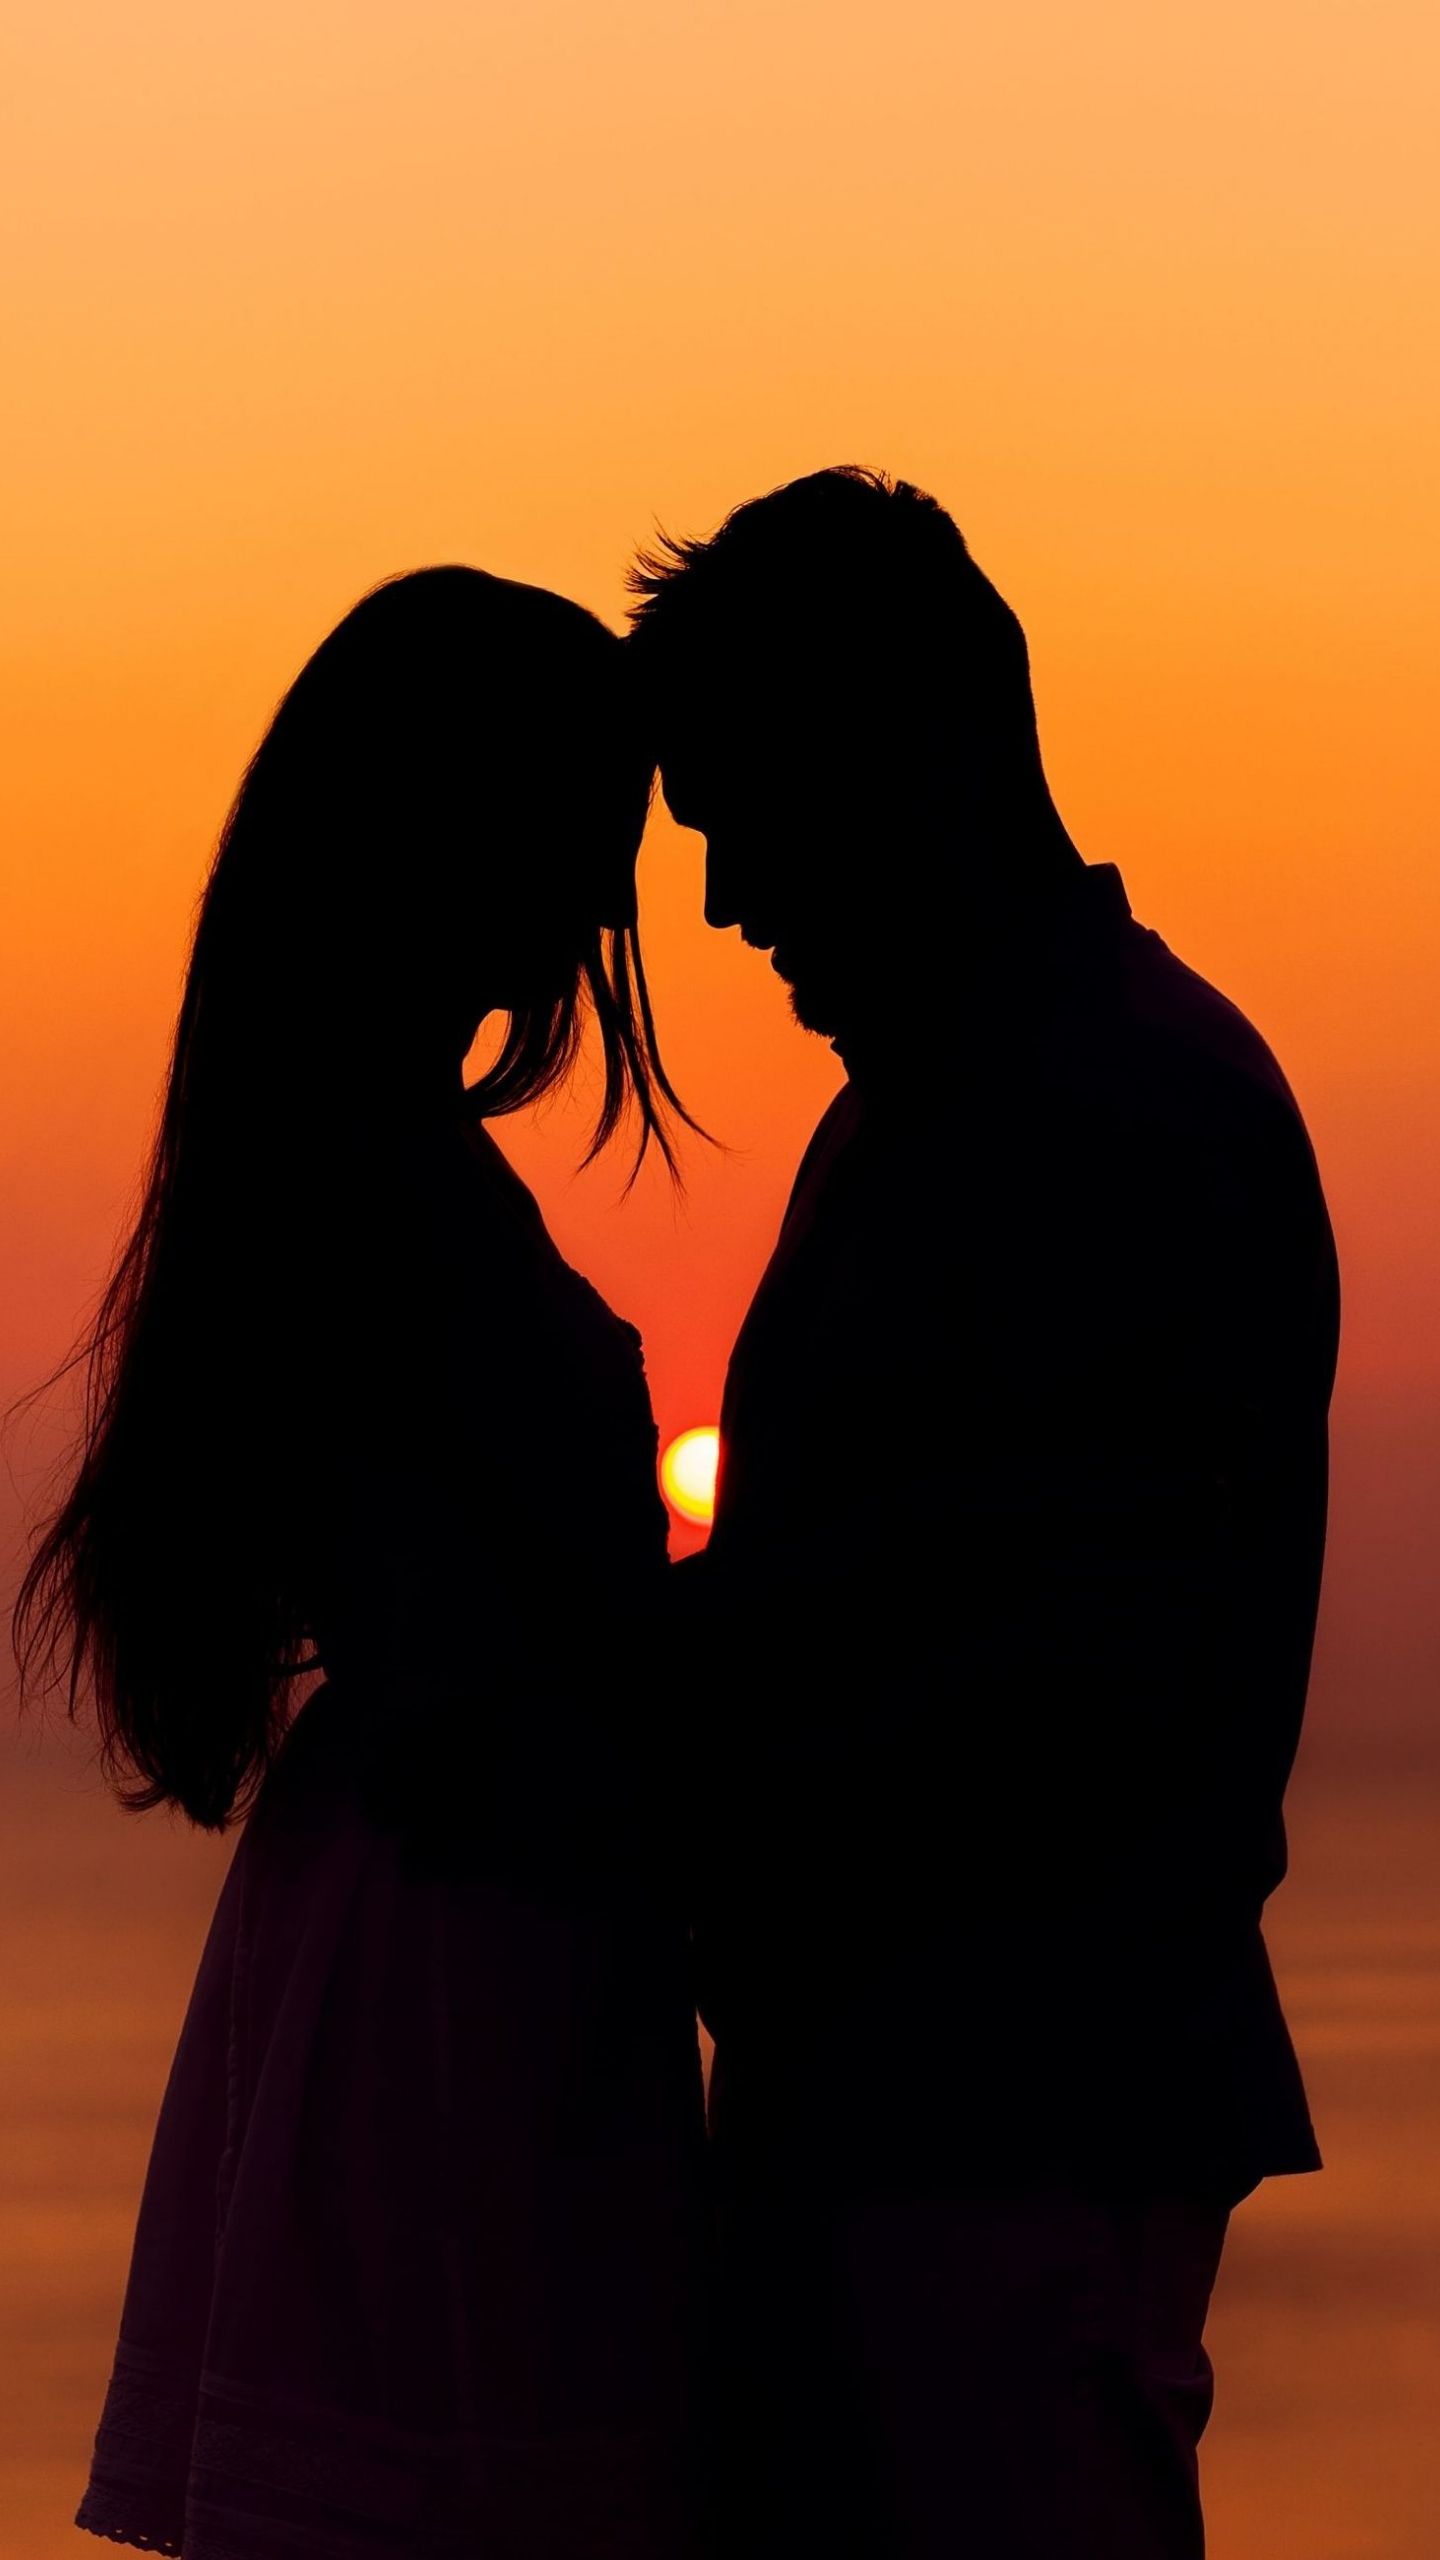 Free download girl woman boy man silhouette love feelings romance